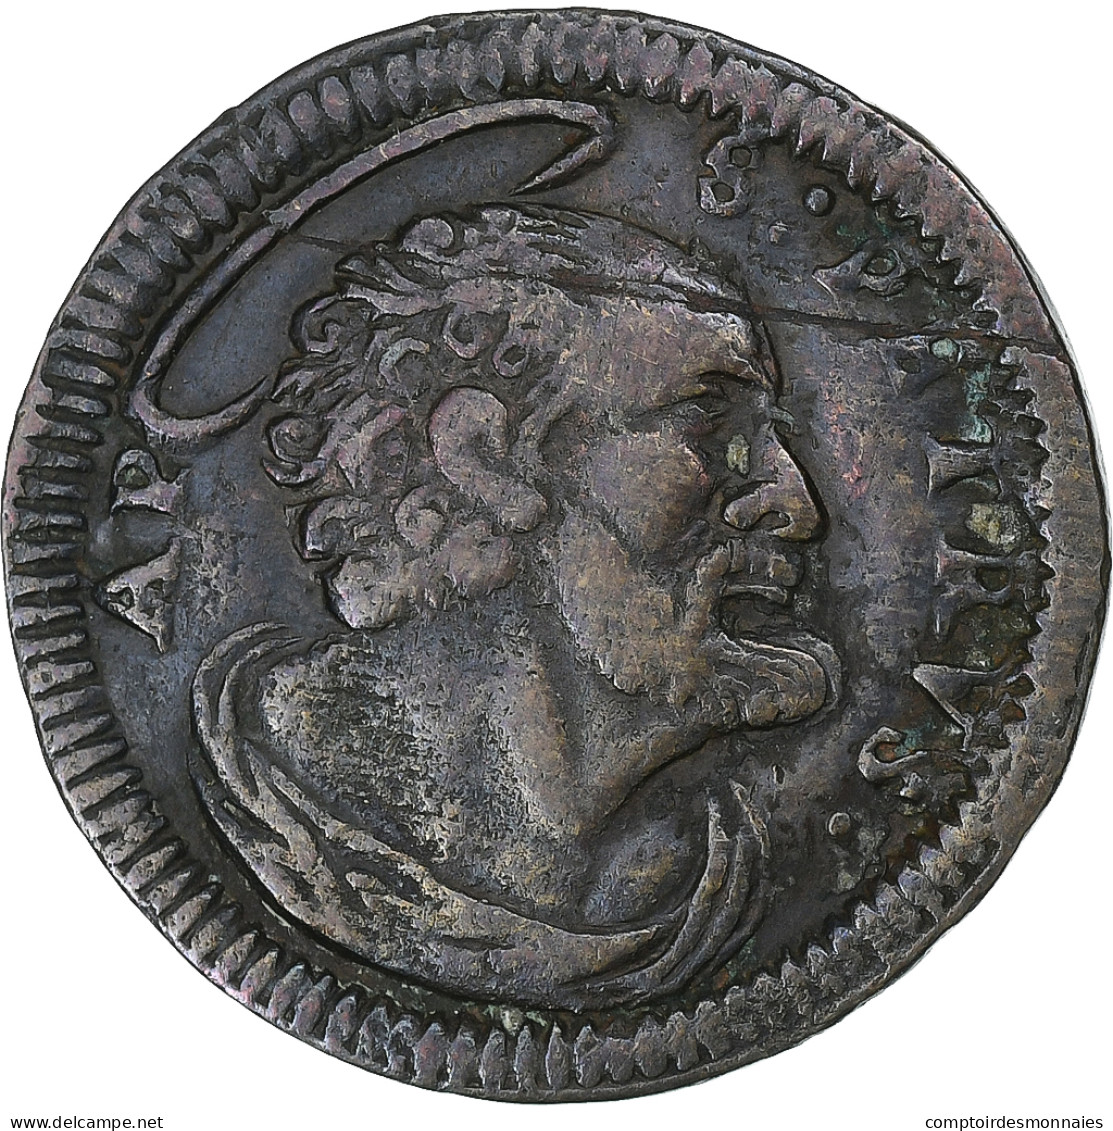 Vatican, PAPAL STATES, Clement XII, Quattrino, 1730-1740, Rome, Bronze, TTB - Vaticano